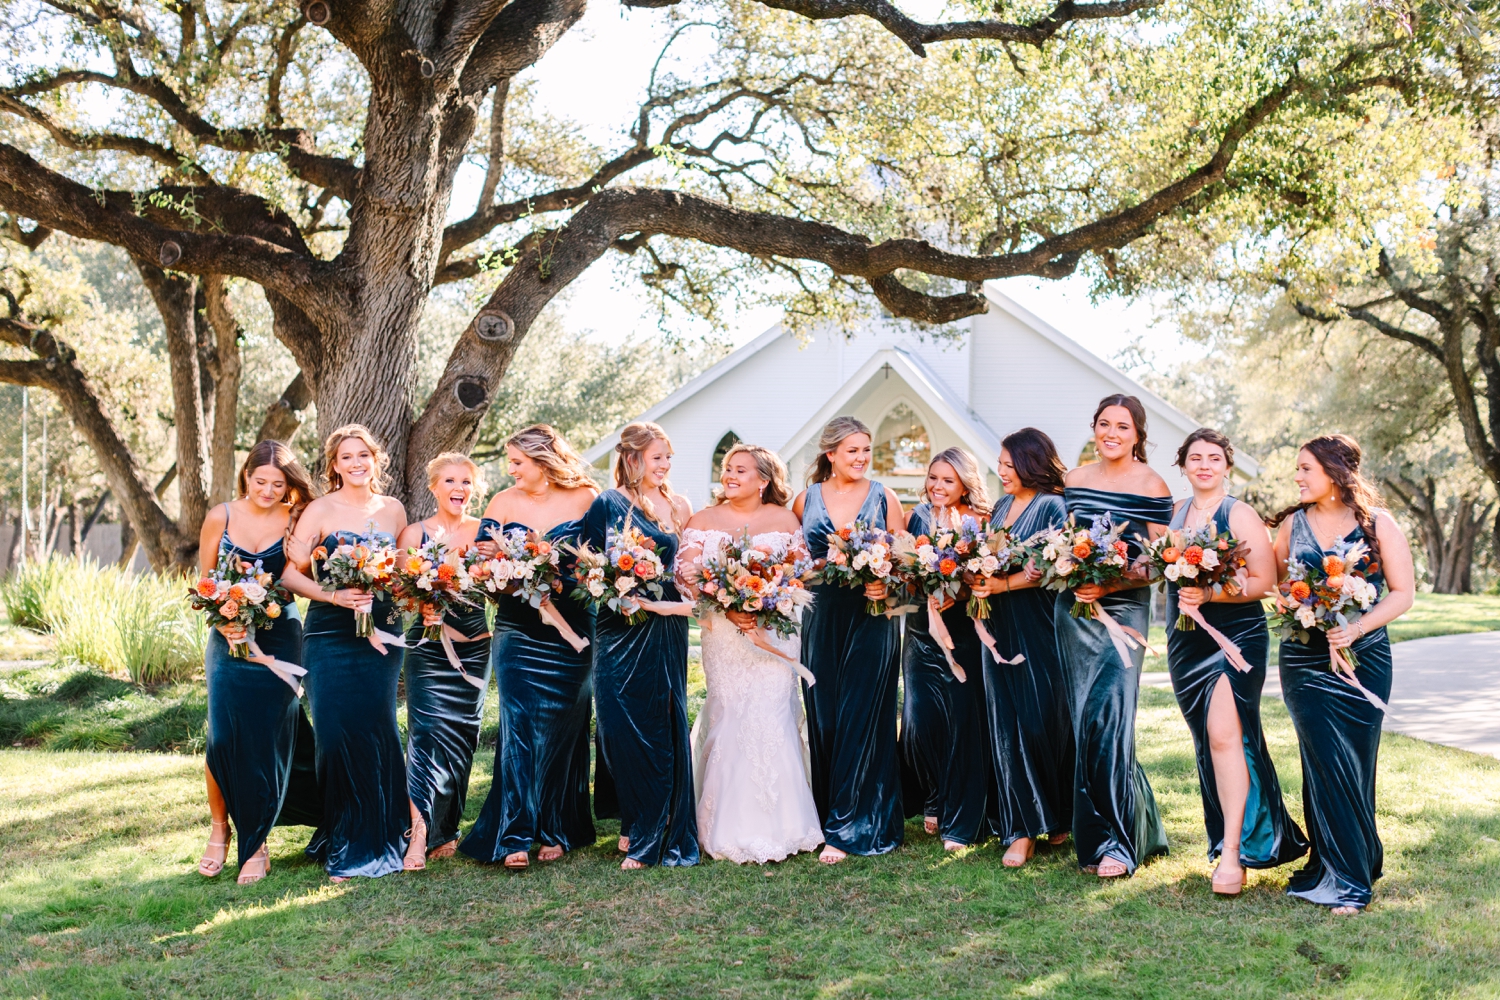 Using Inspiration for Your Wedding Day | Reiley + Rose | Central Texas Floral Designer | Velvet bridesmaids dresses